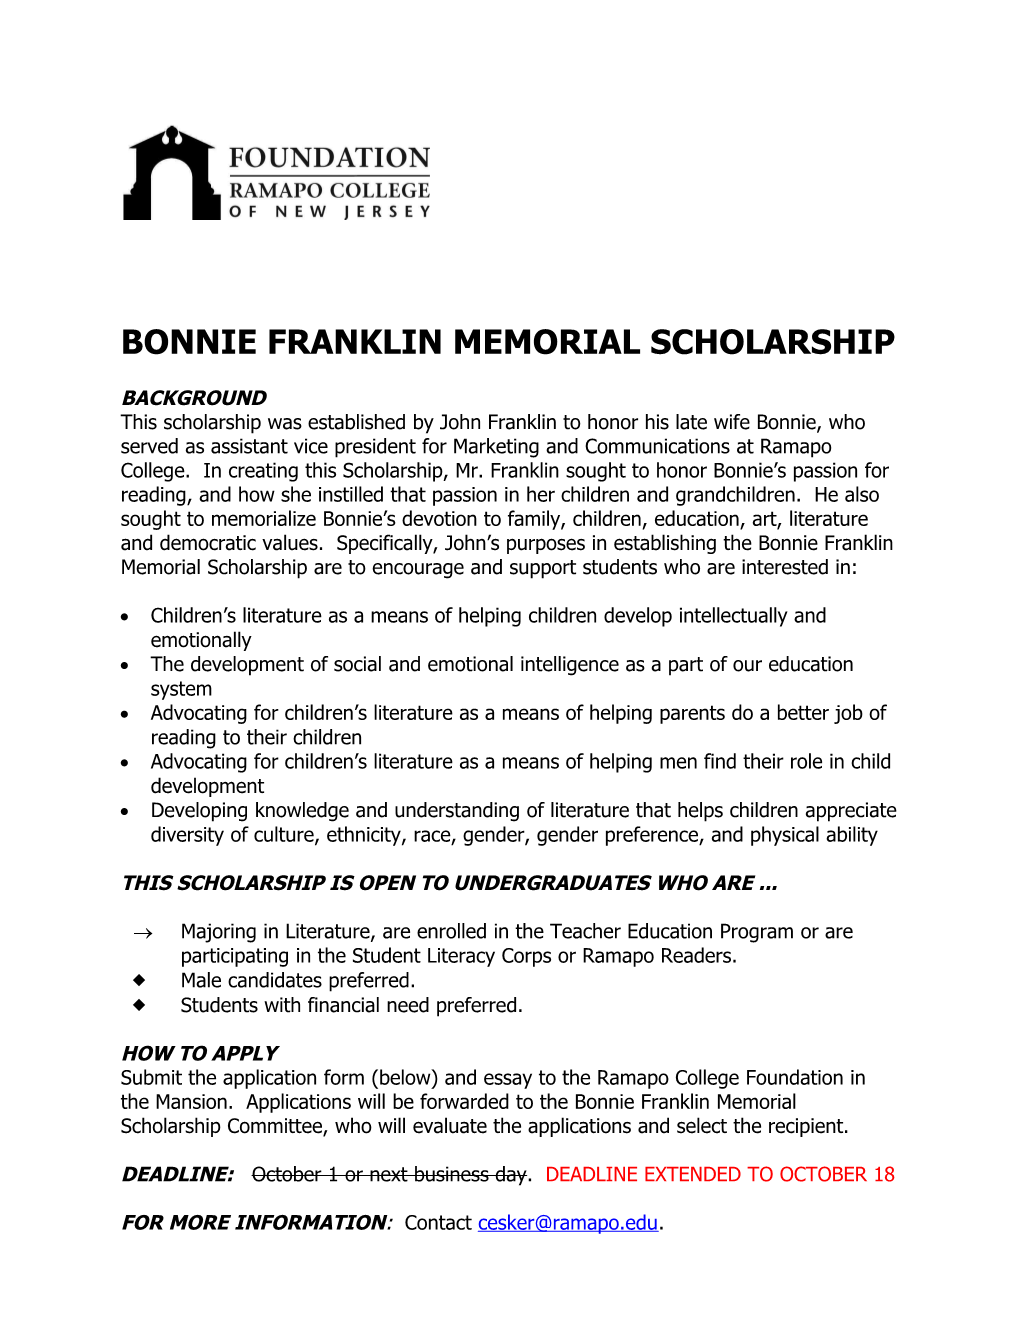 Bonnie Franklin Memorial Scholarship